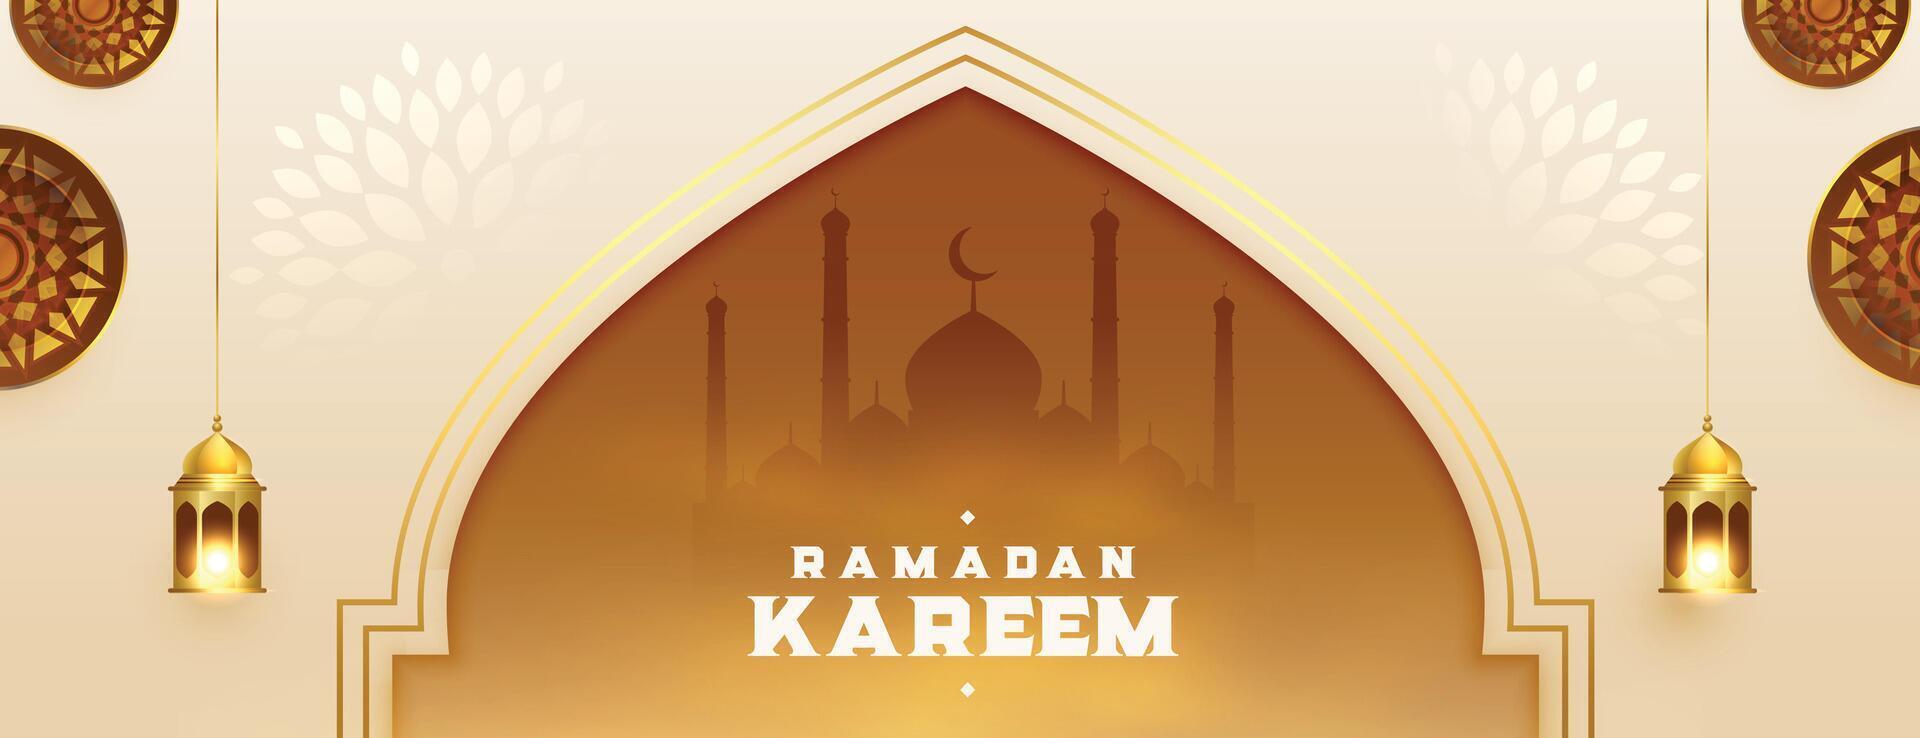 Arabo Ramadan kareem musulmano Festival bandiera design vettore